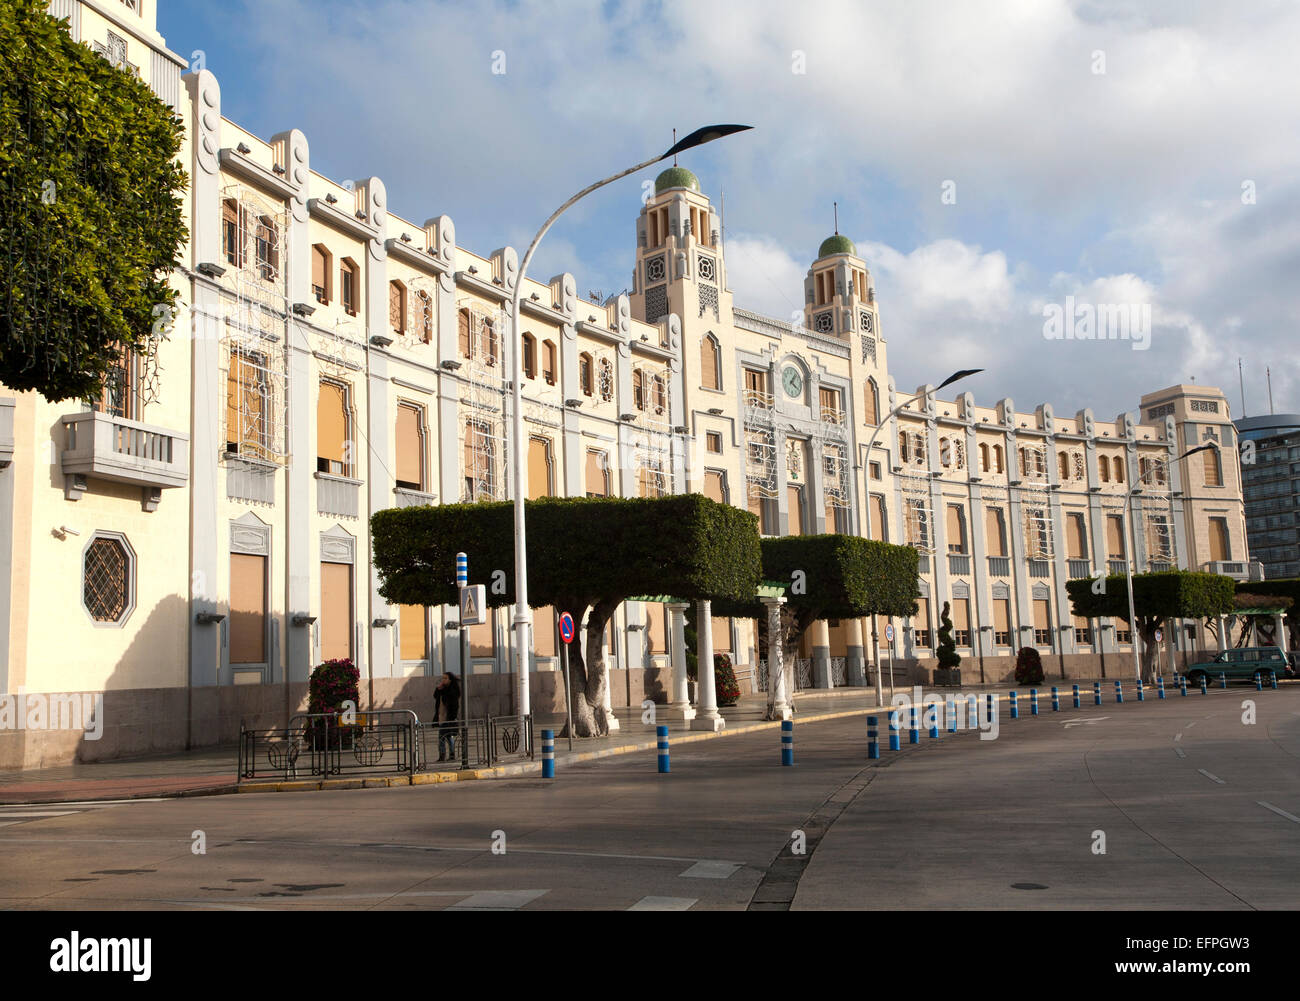 Palacio de la Asamblea architecte Enrique Nieto, Plaza de España, Melilla, Espagne, Afrique du Nord Banque D'Images